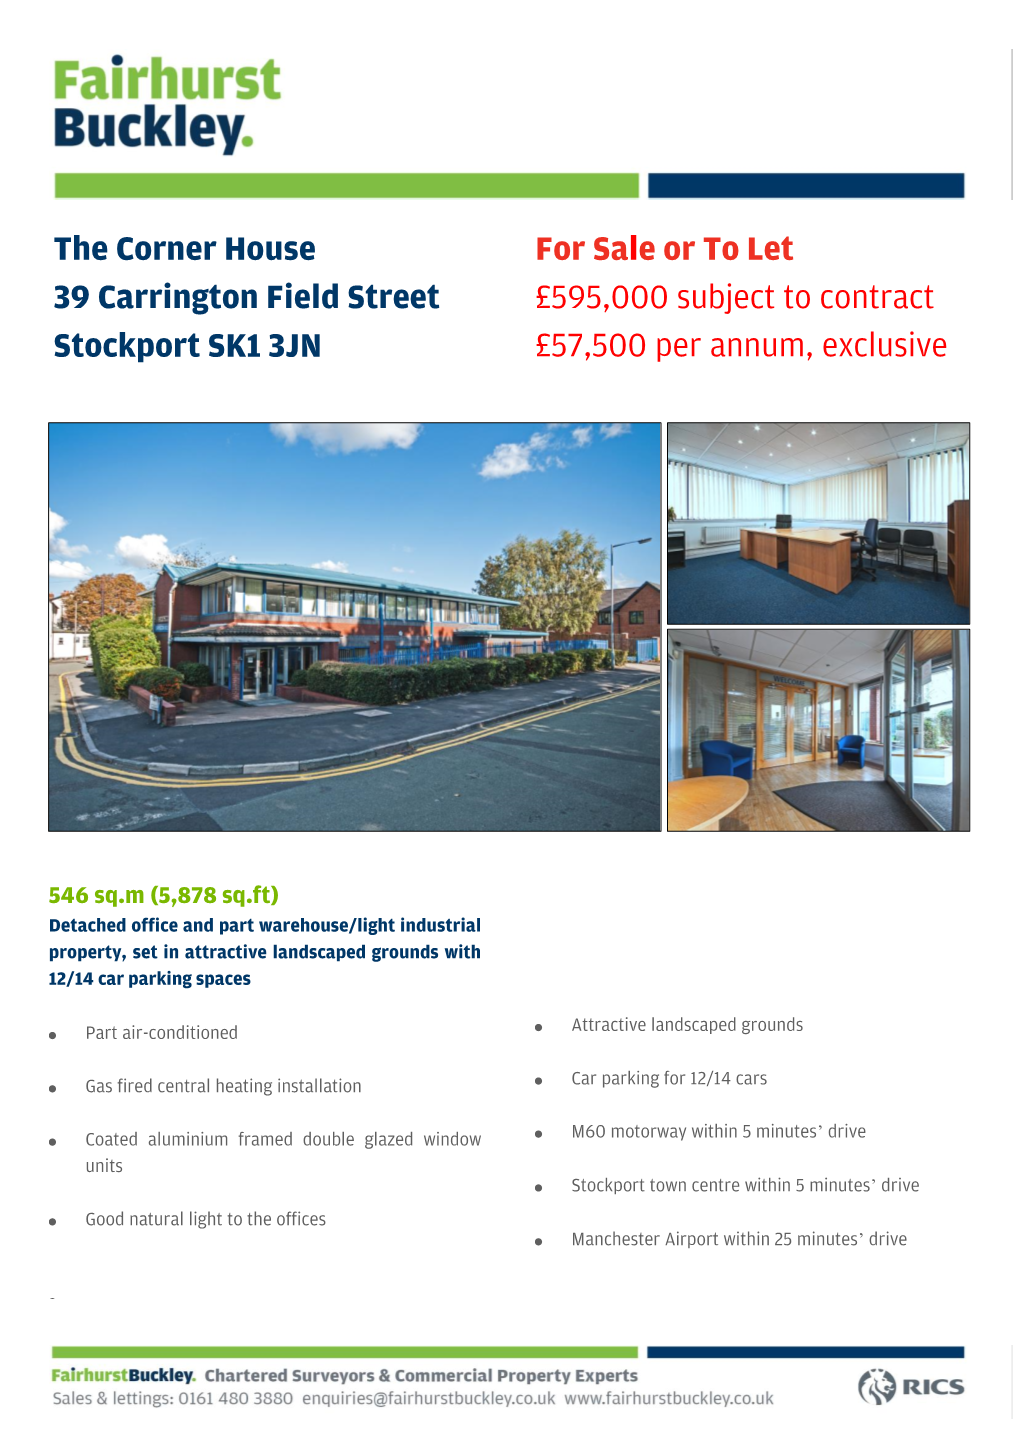 The Corner House 39 Carrington Field Street Stockport SK1 3JN for Sale